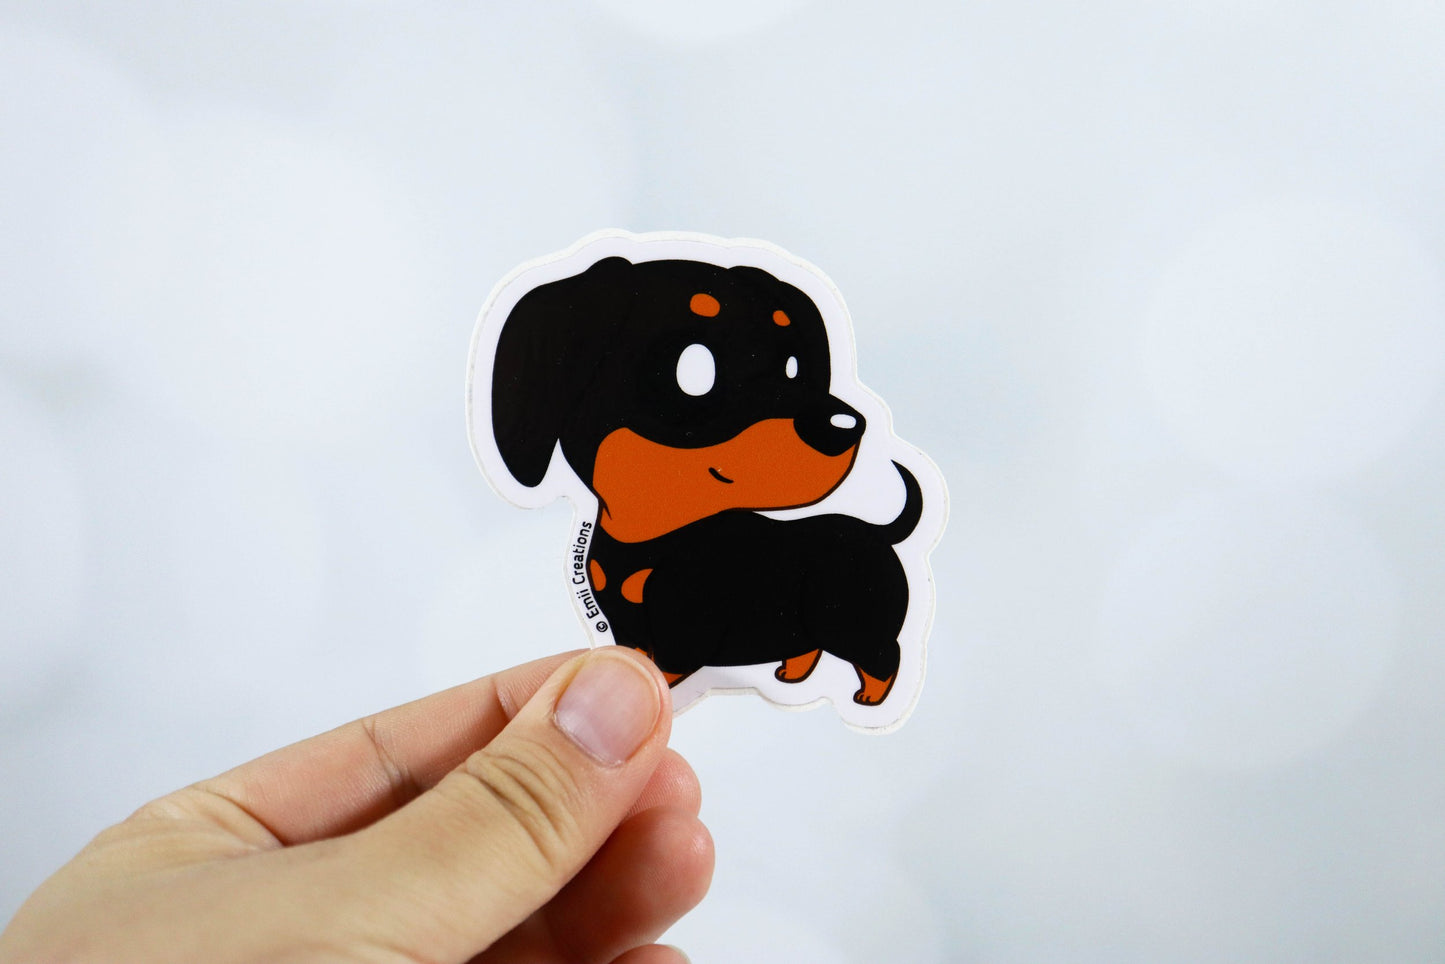 Cute Dachshund Black and Tan Dog Stickers